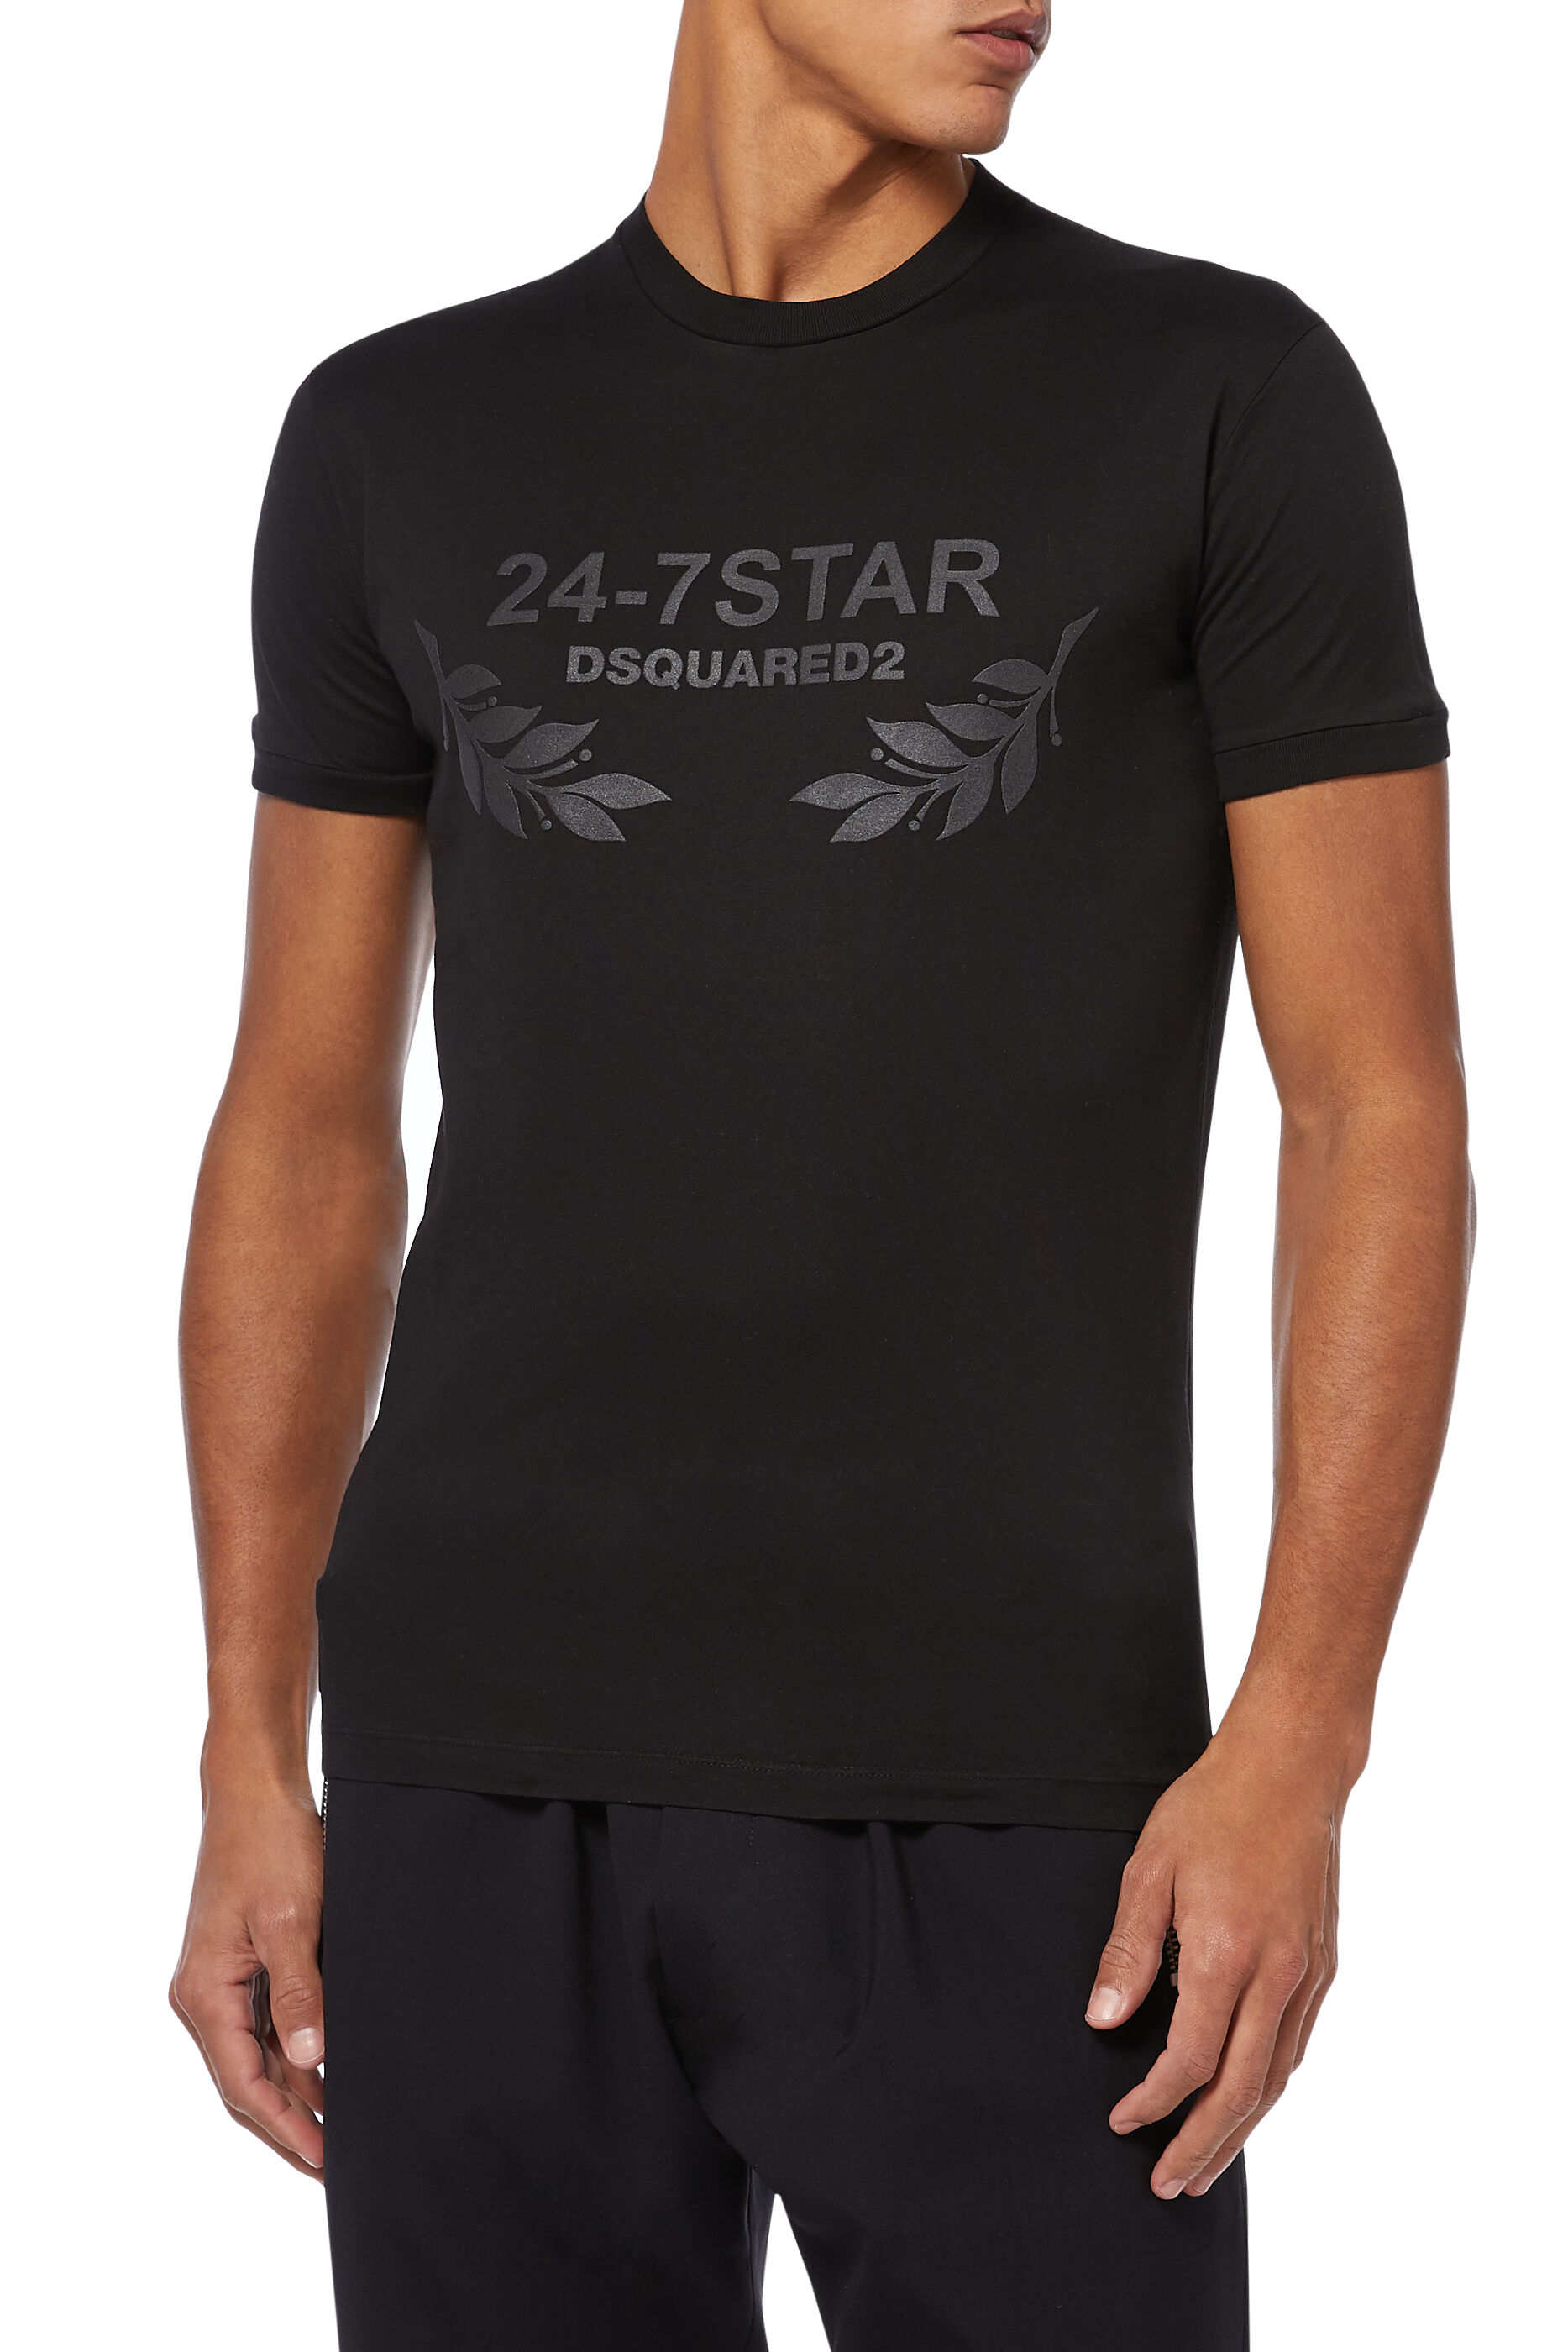 dsquared 24 7 star t shirt